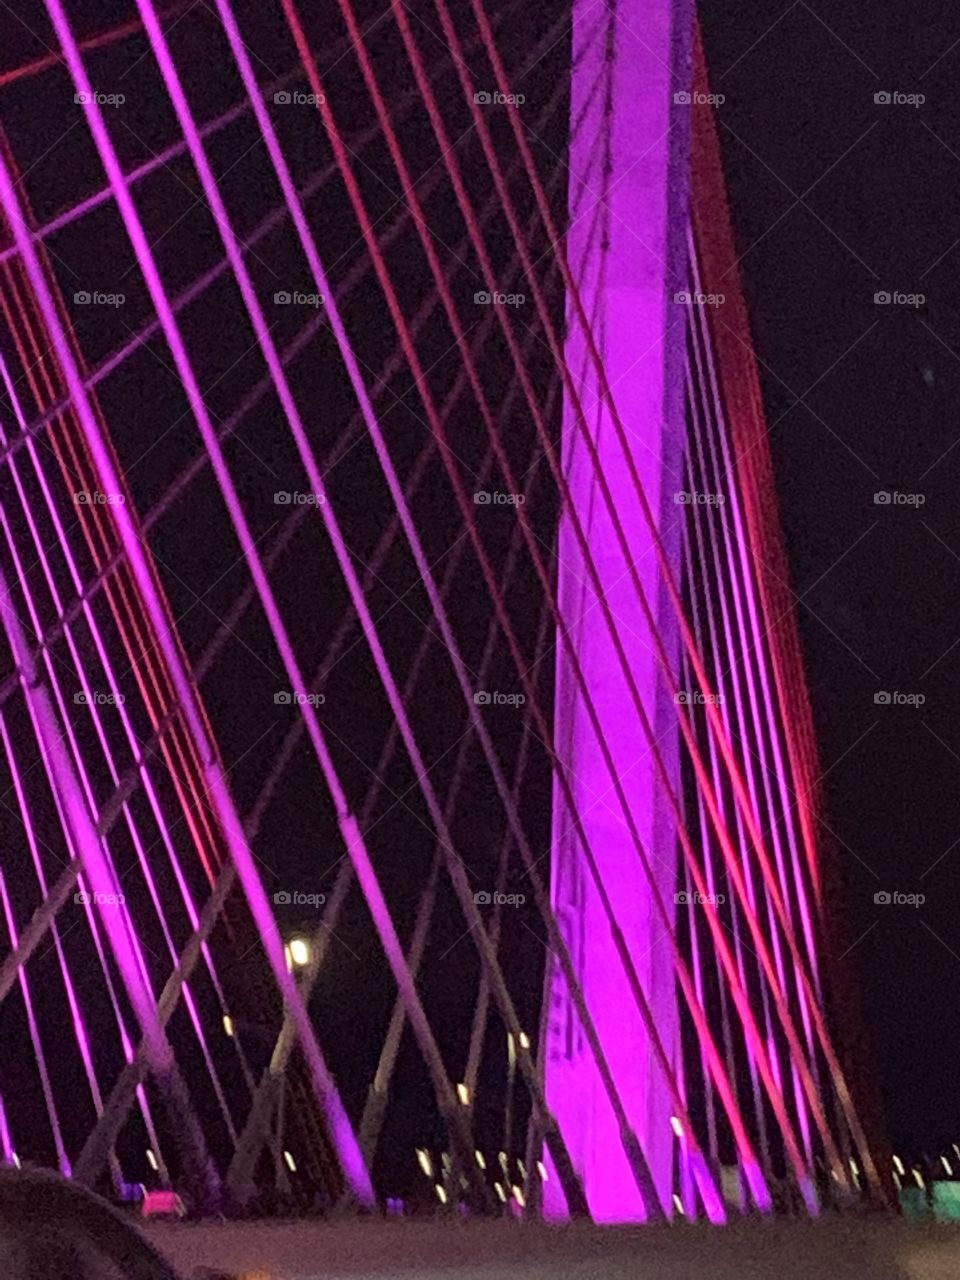 Colorful Bridge